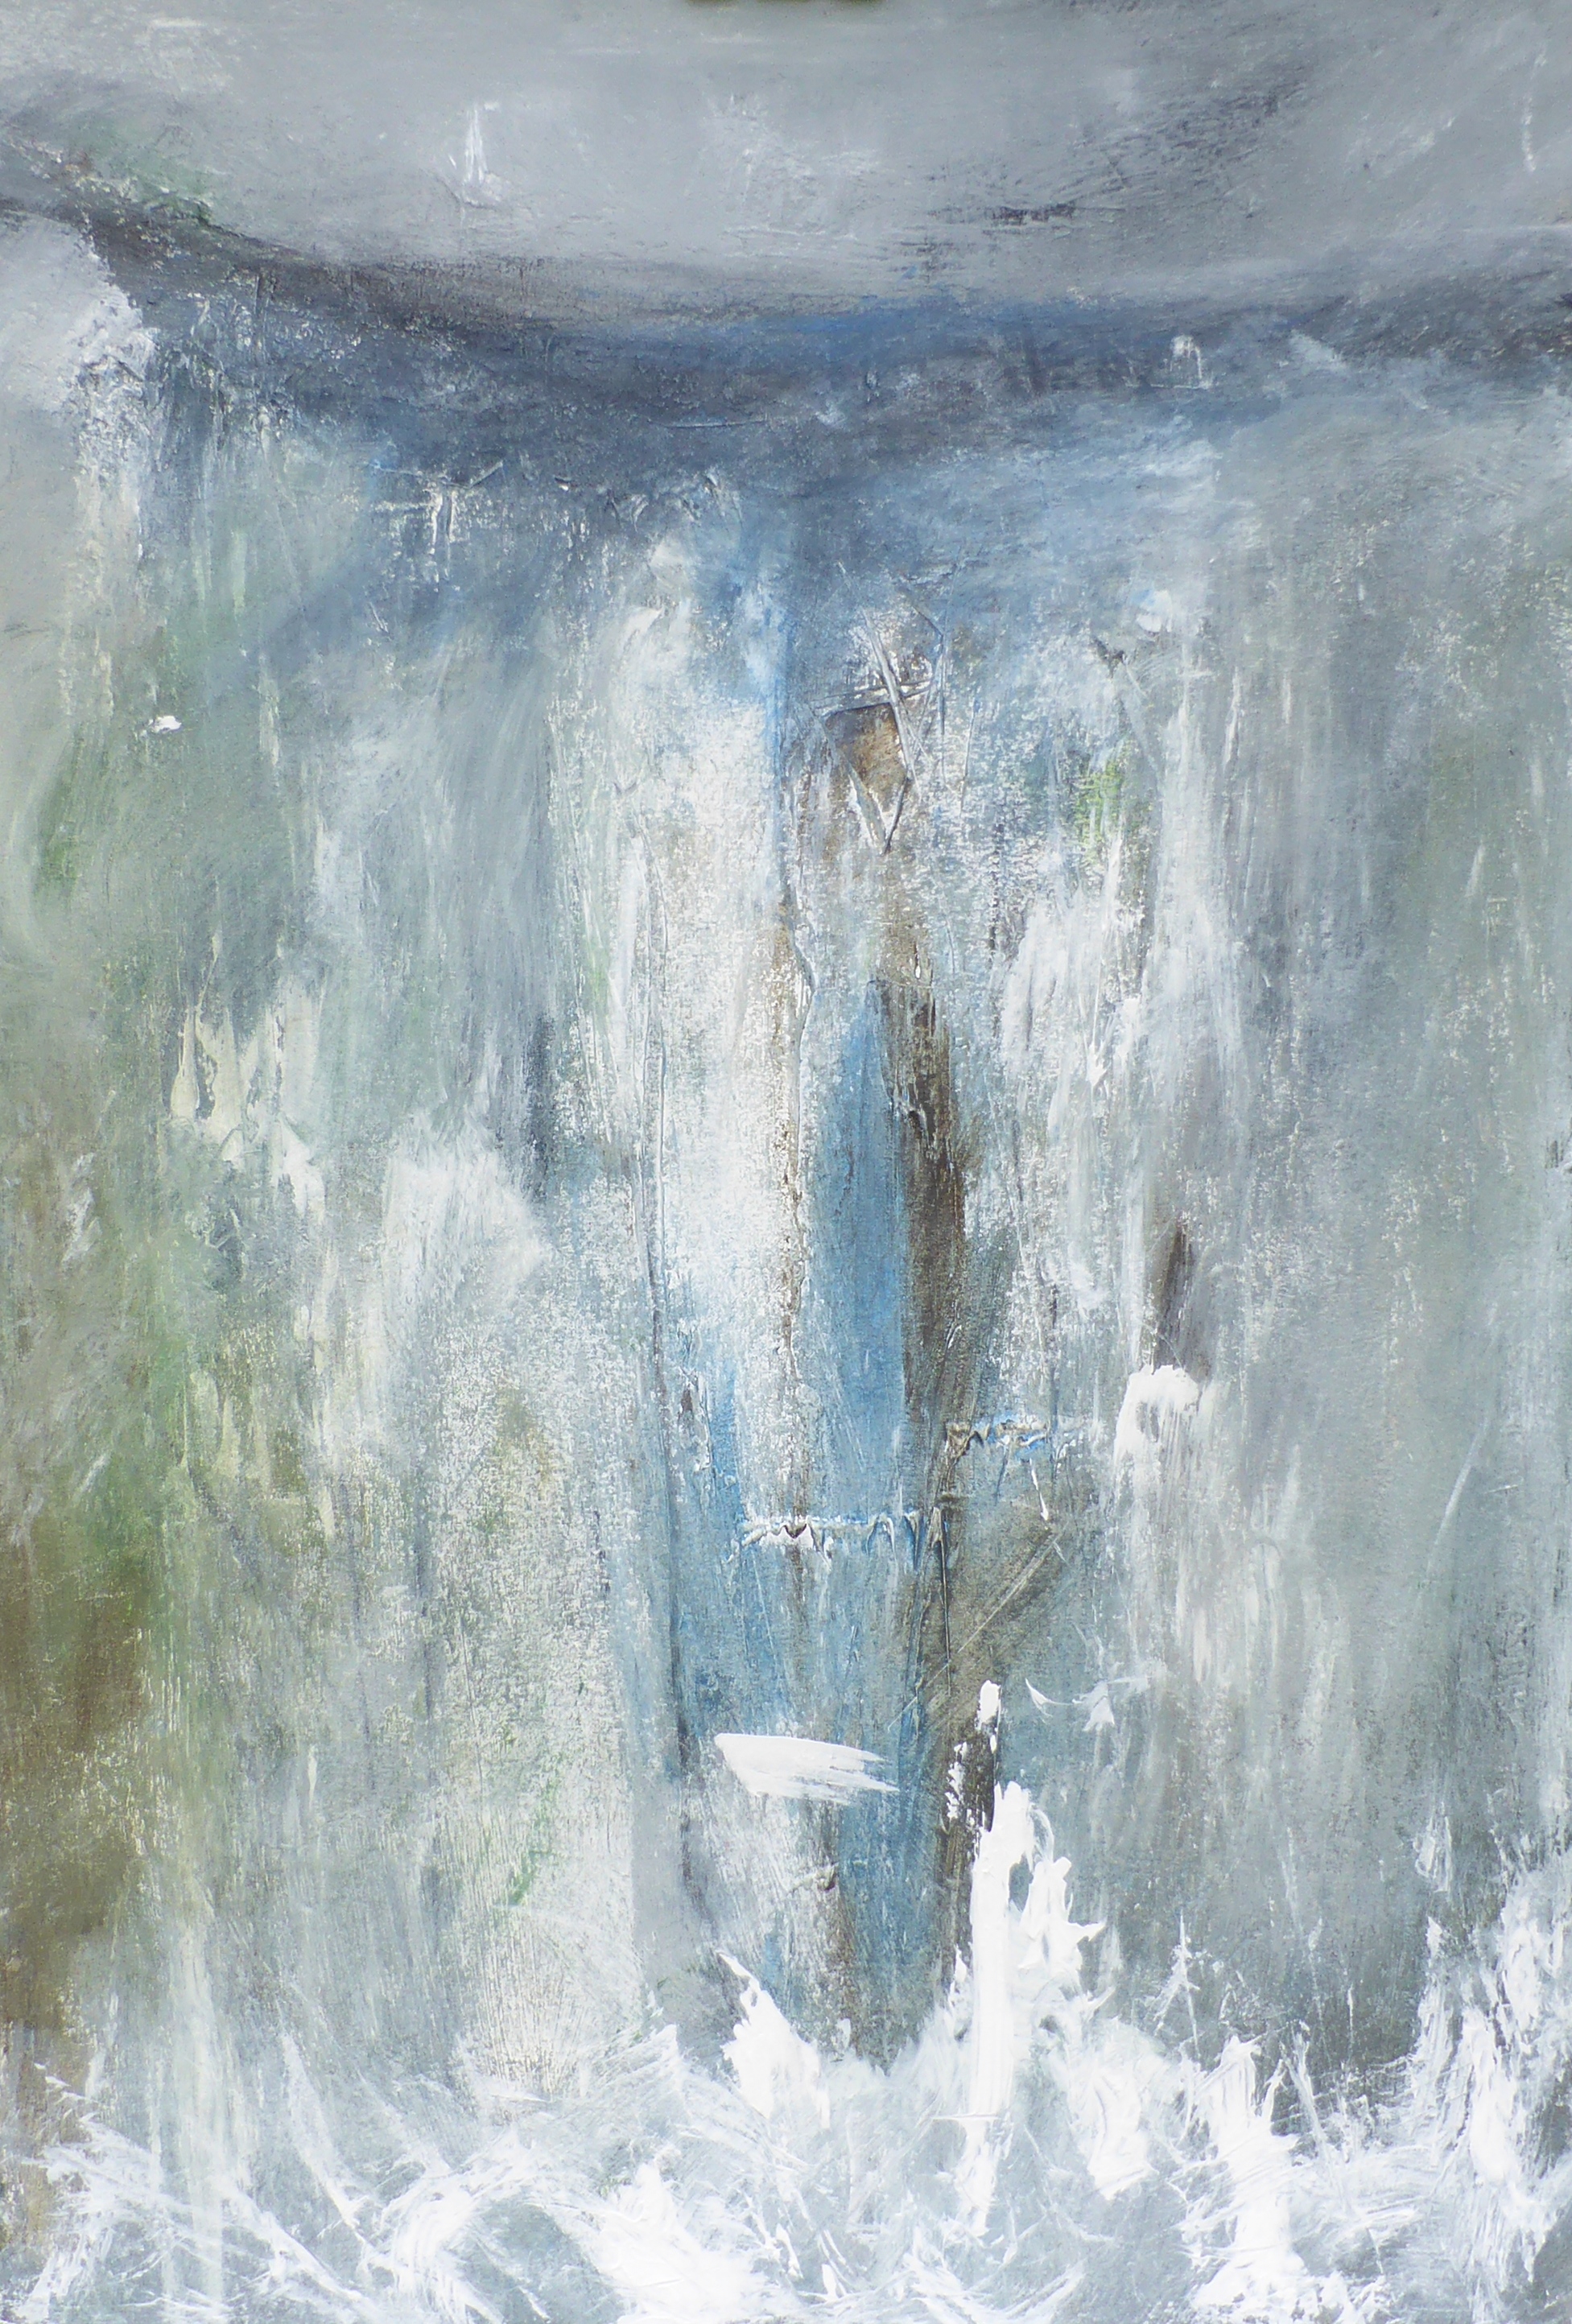 Waterfall ii, Mixed Media on Paper, 72 x 52cm